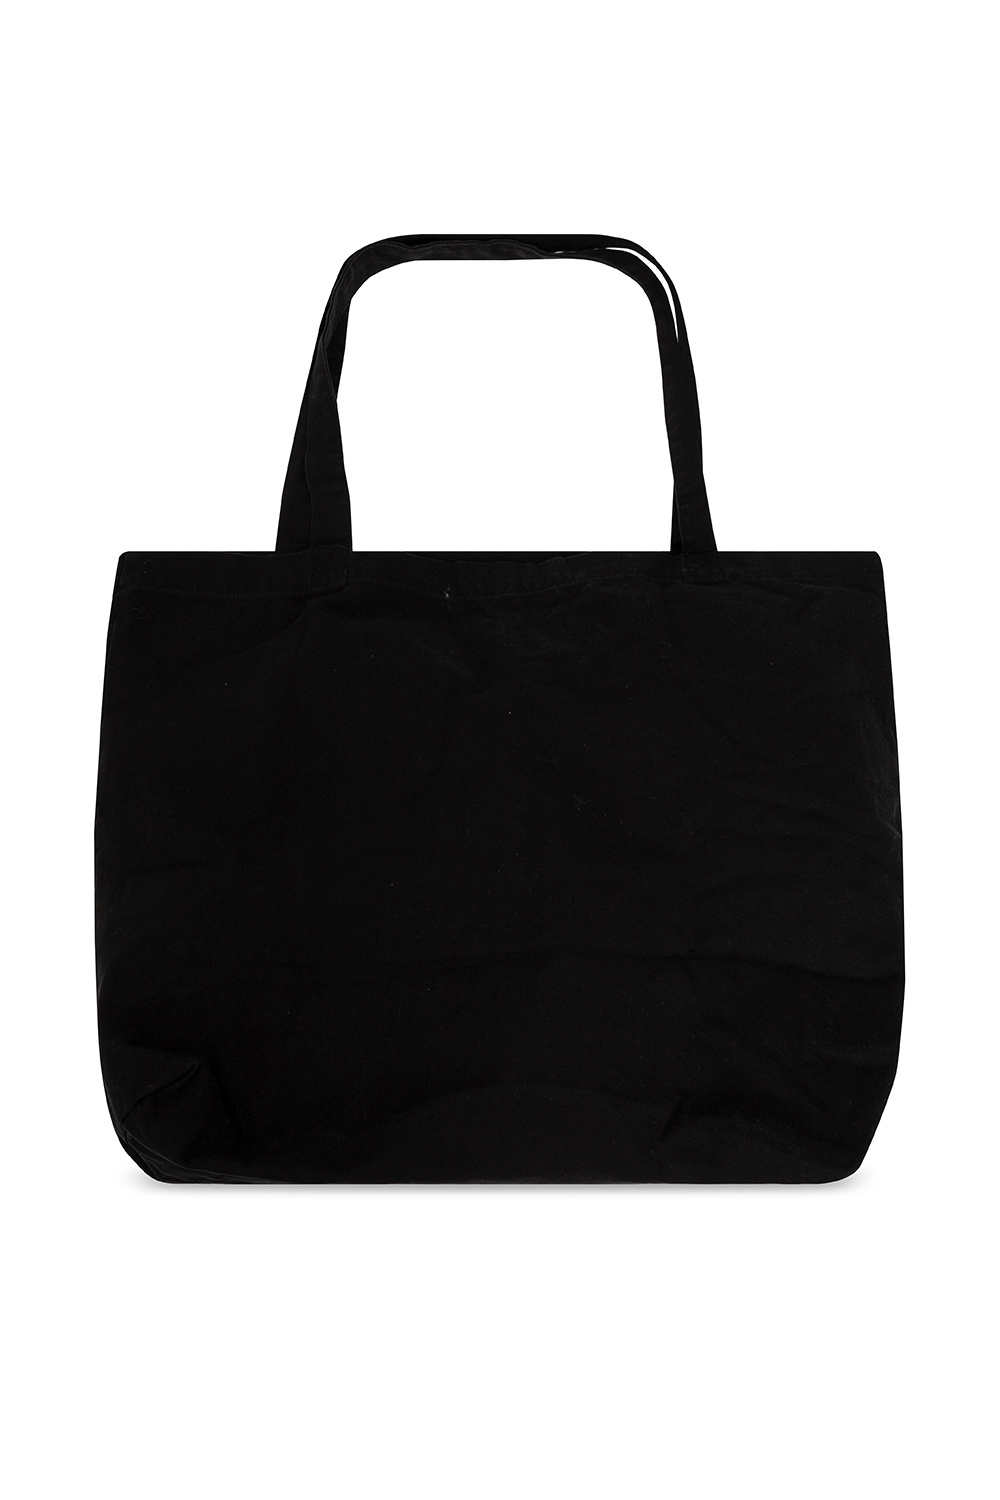 AllSaints ‘Smudger’ shopper bag